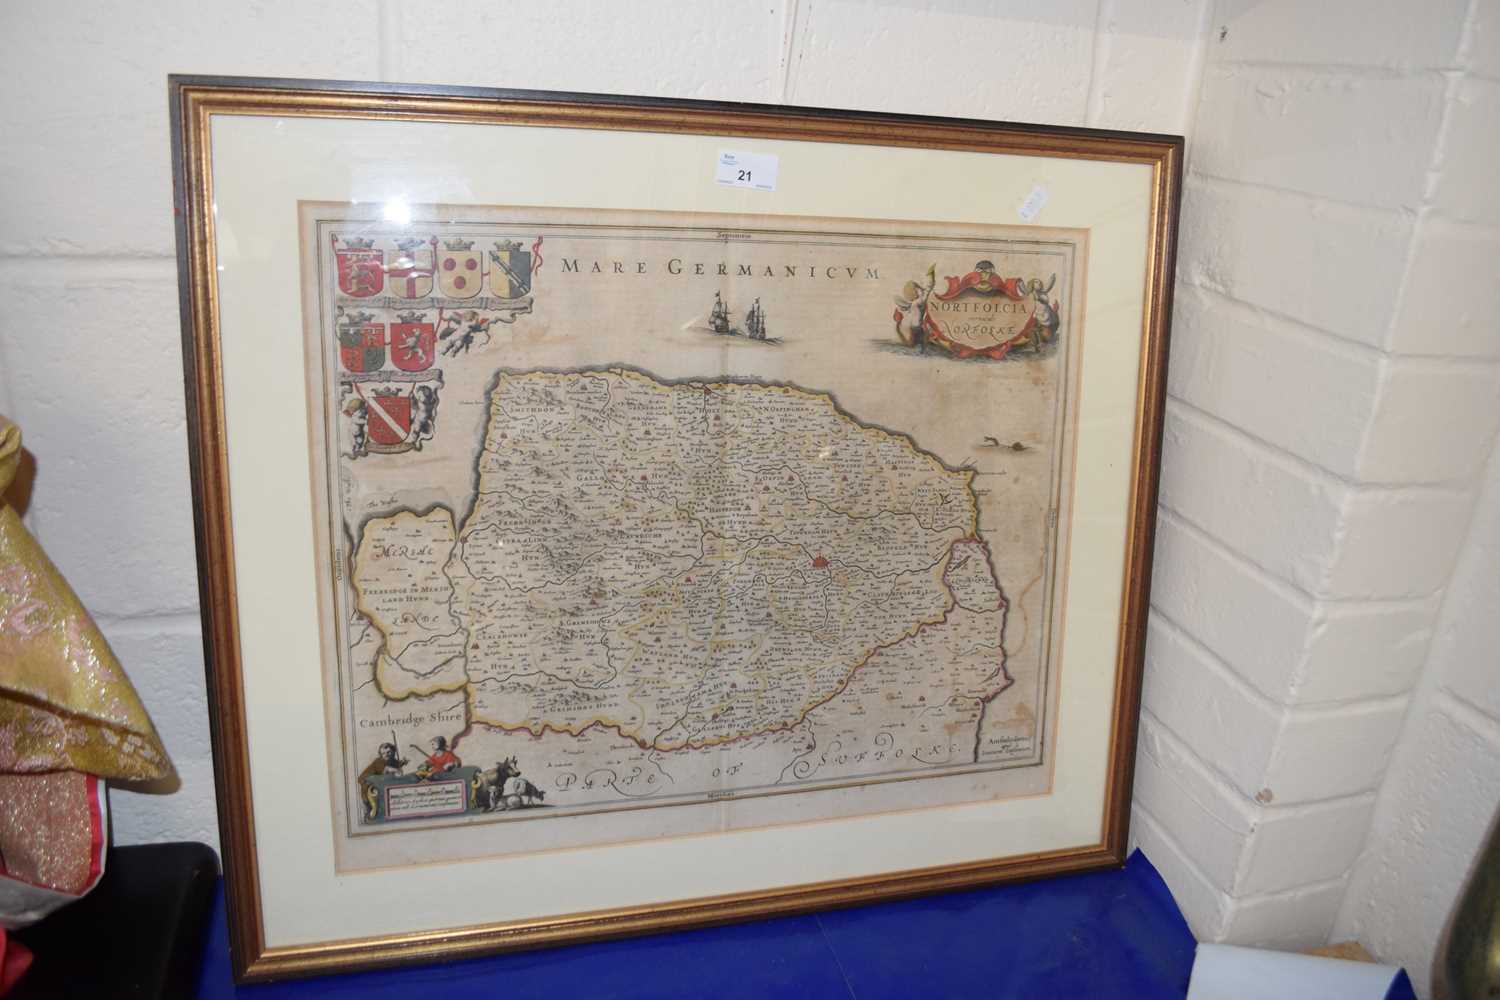 A map of Norfolk, framed and glazed